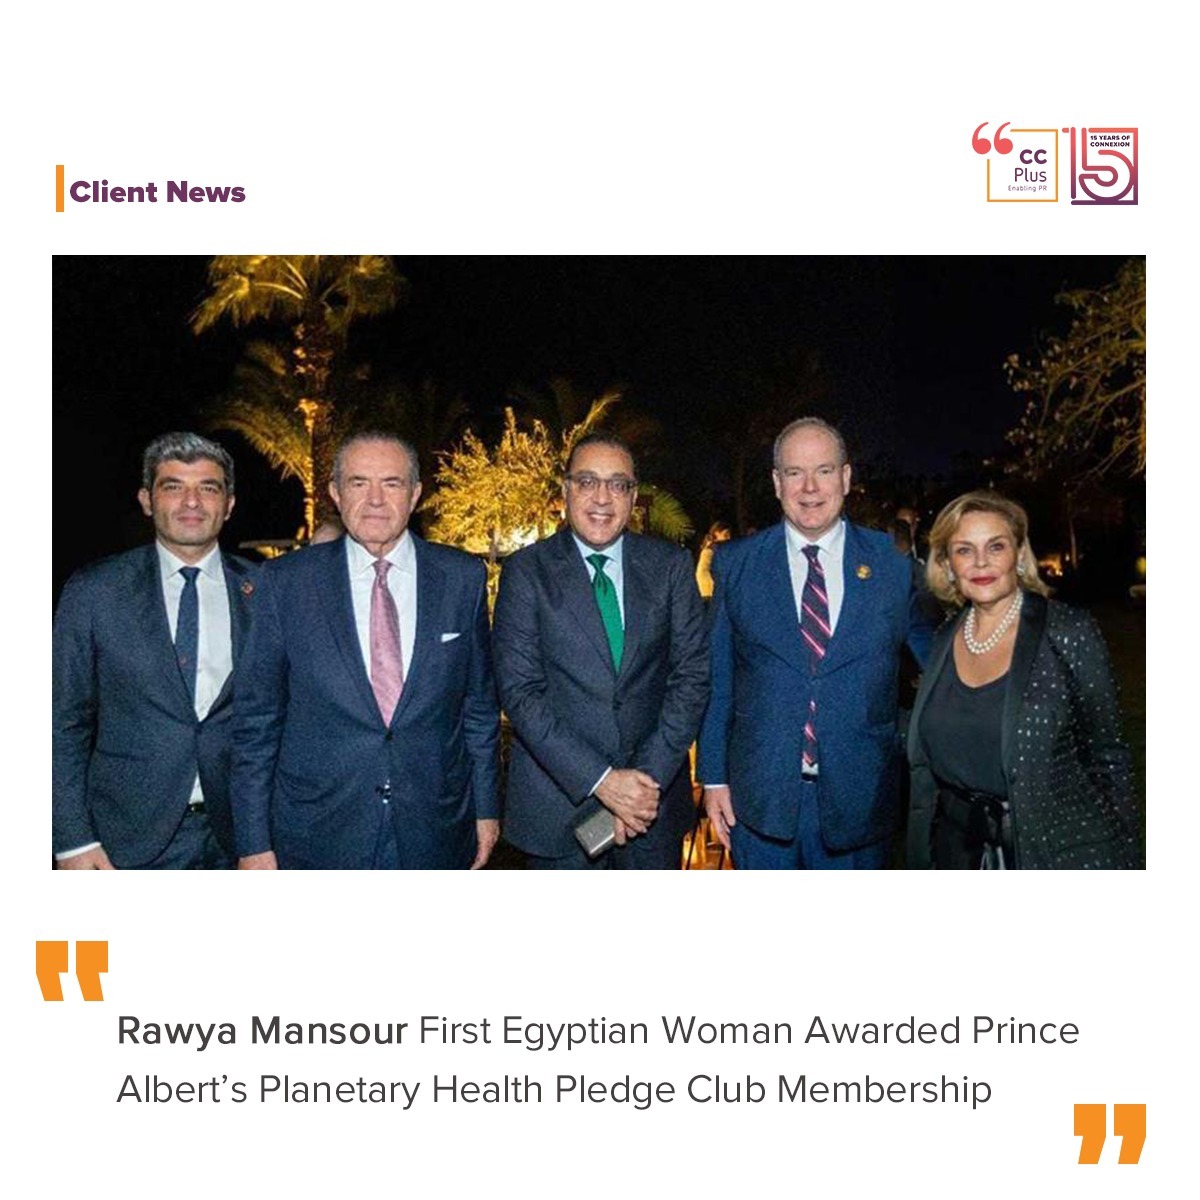 Rawya Mansour first Egyptian woman awarded Prince Albert’s Planetary Health Pledge Club membership.